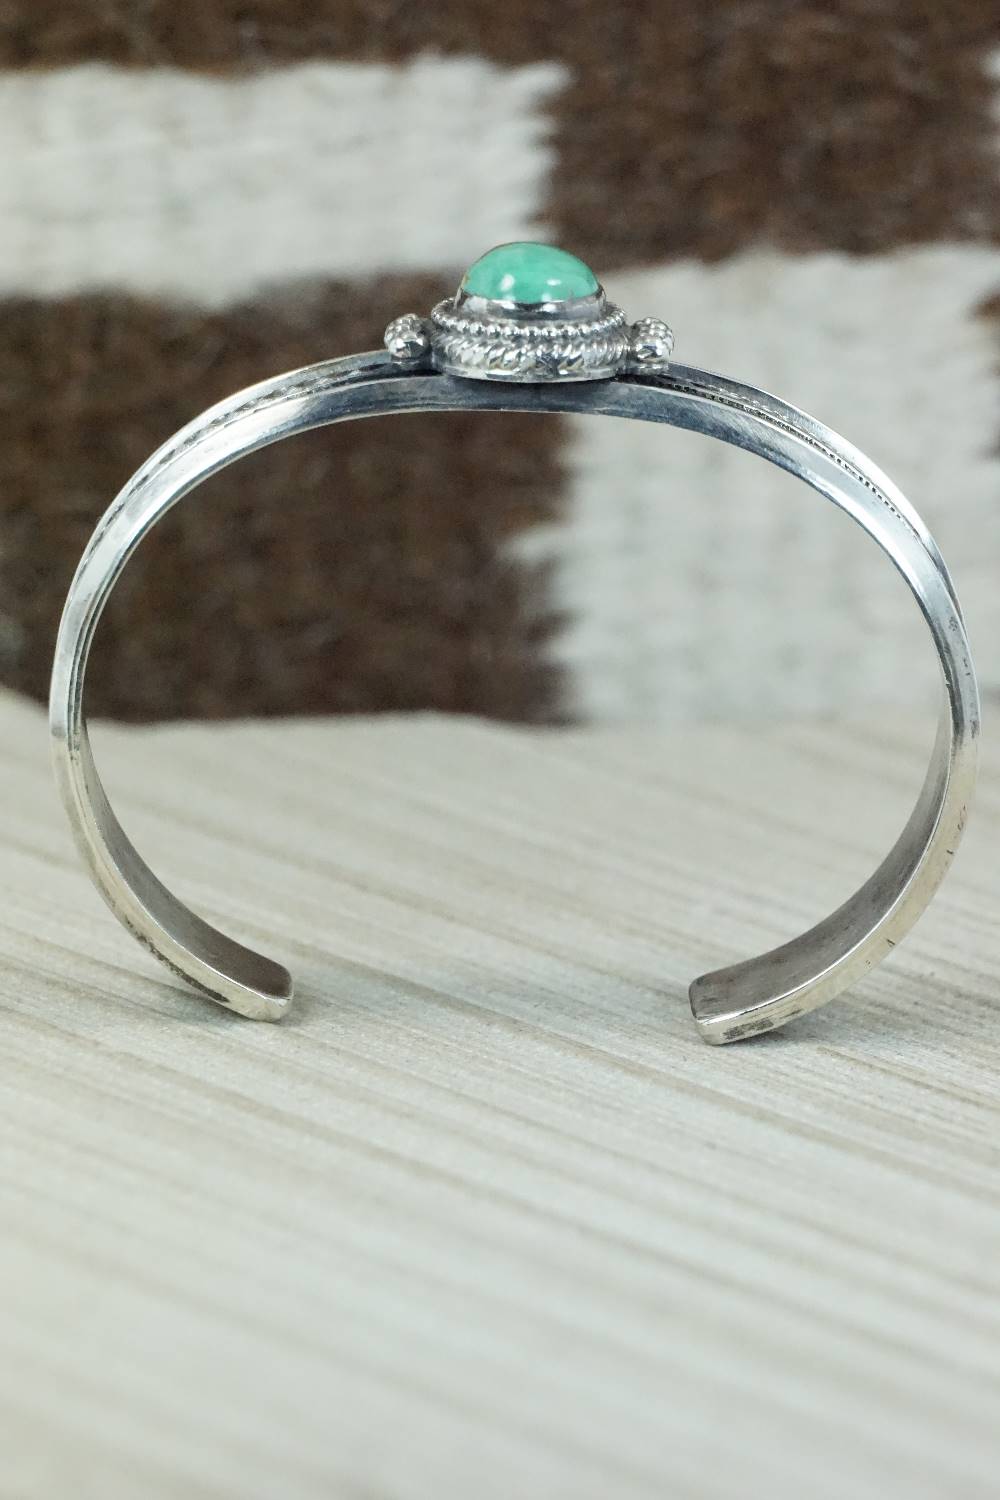 Turquoise & Sterling Silver Bracelet - Navajo